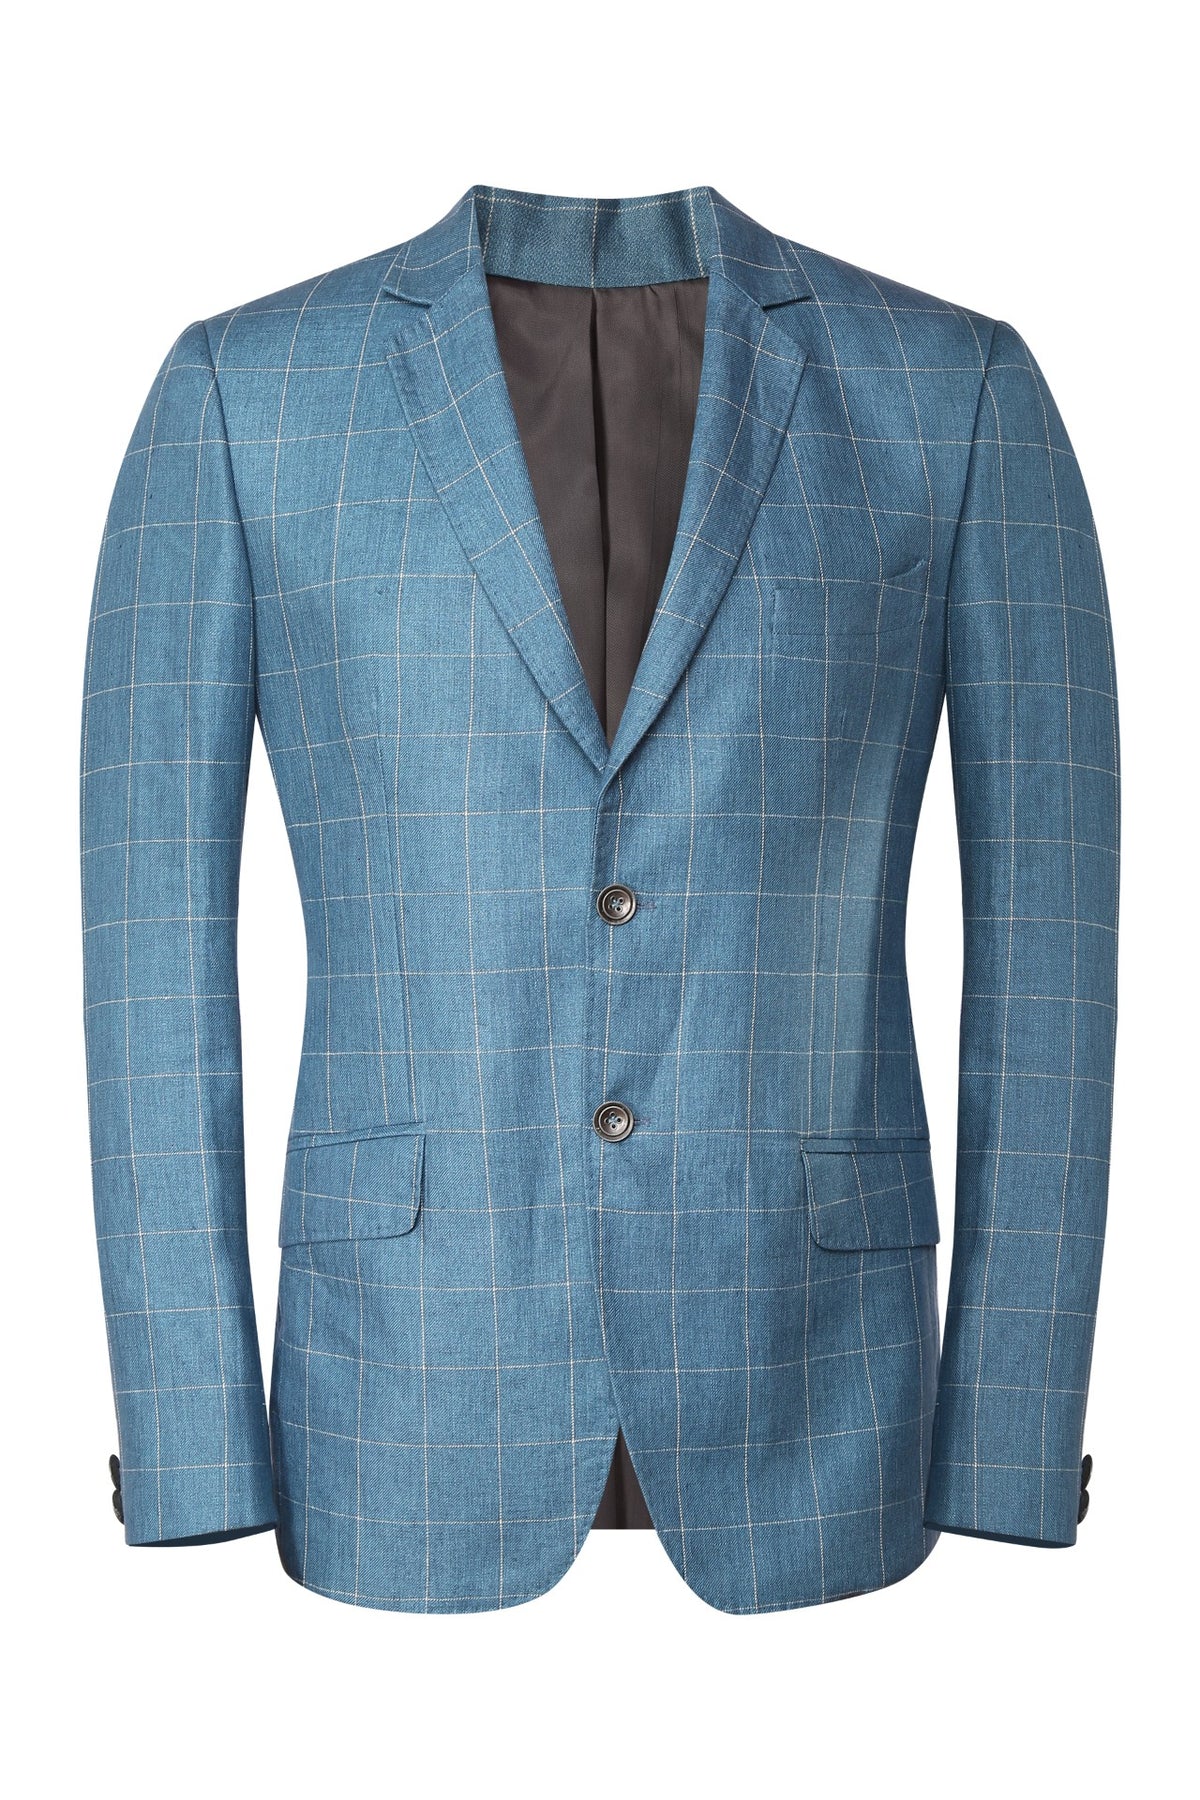 Tranquil blue checkered linen jacket